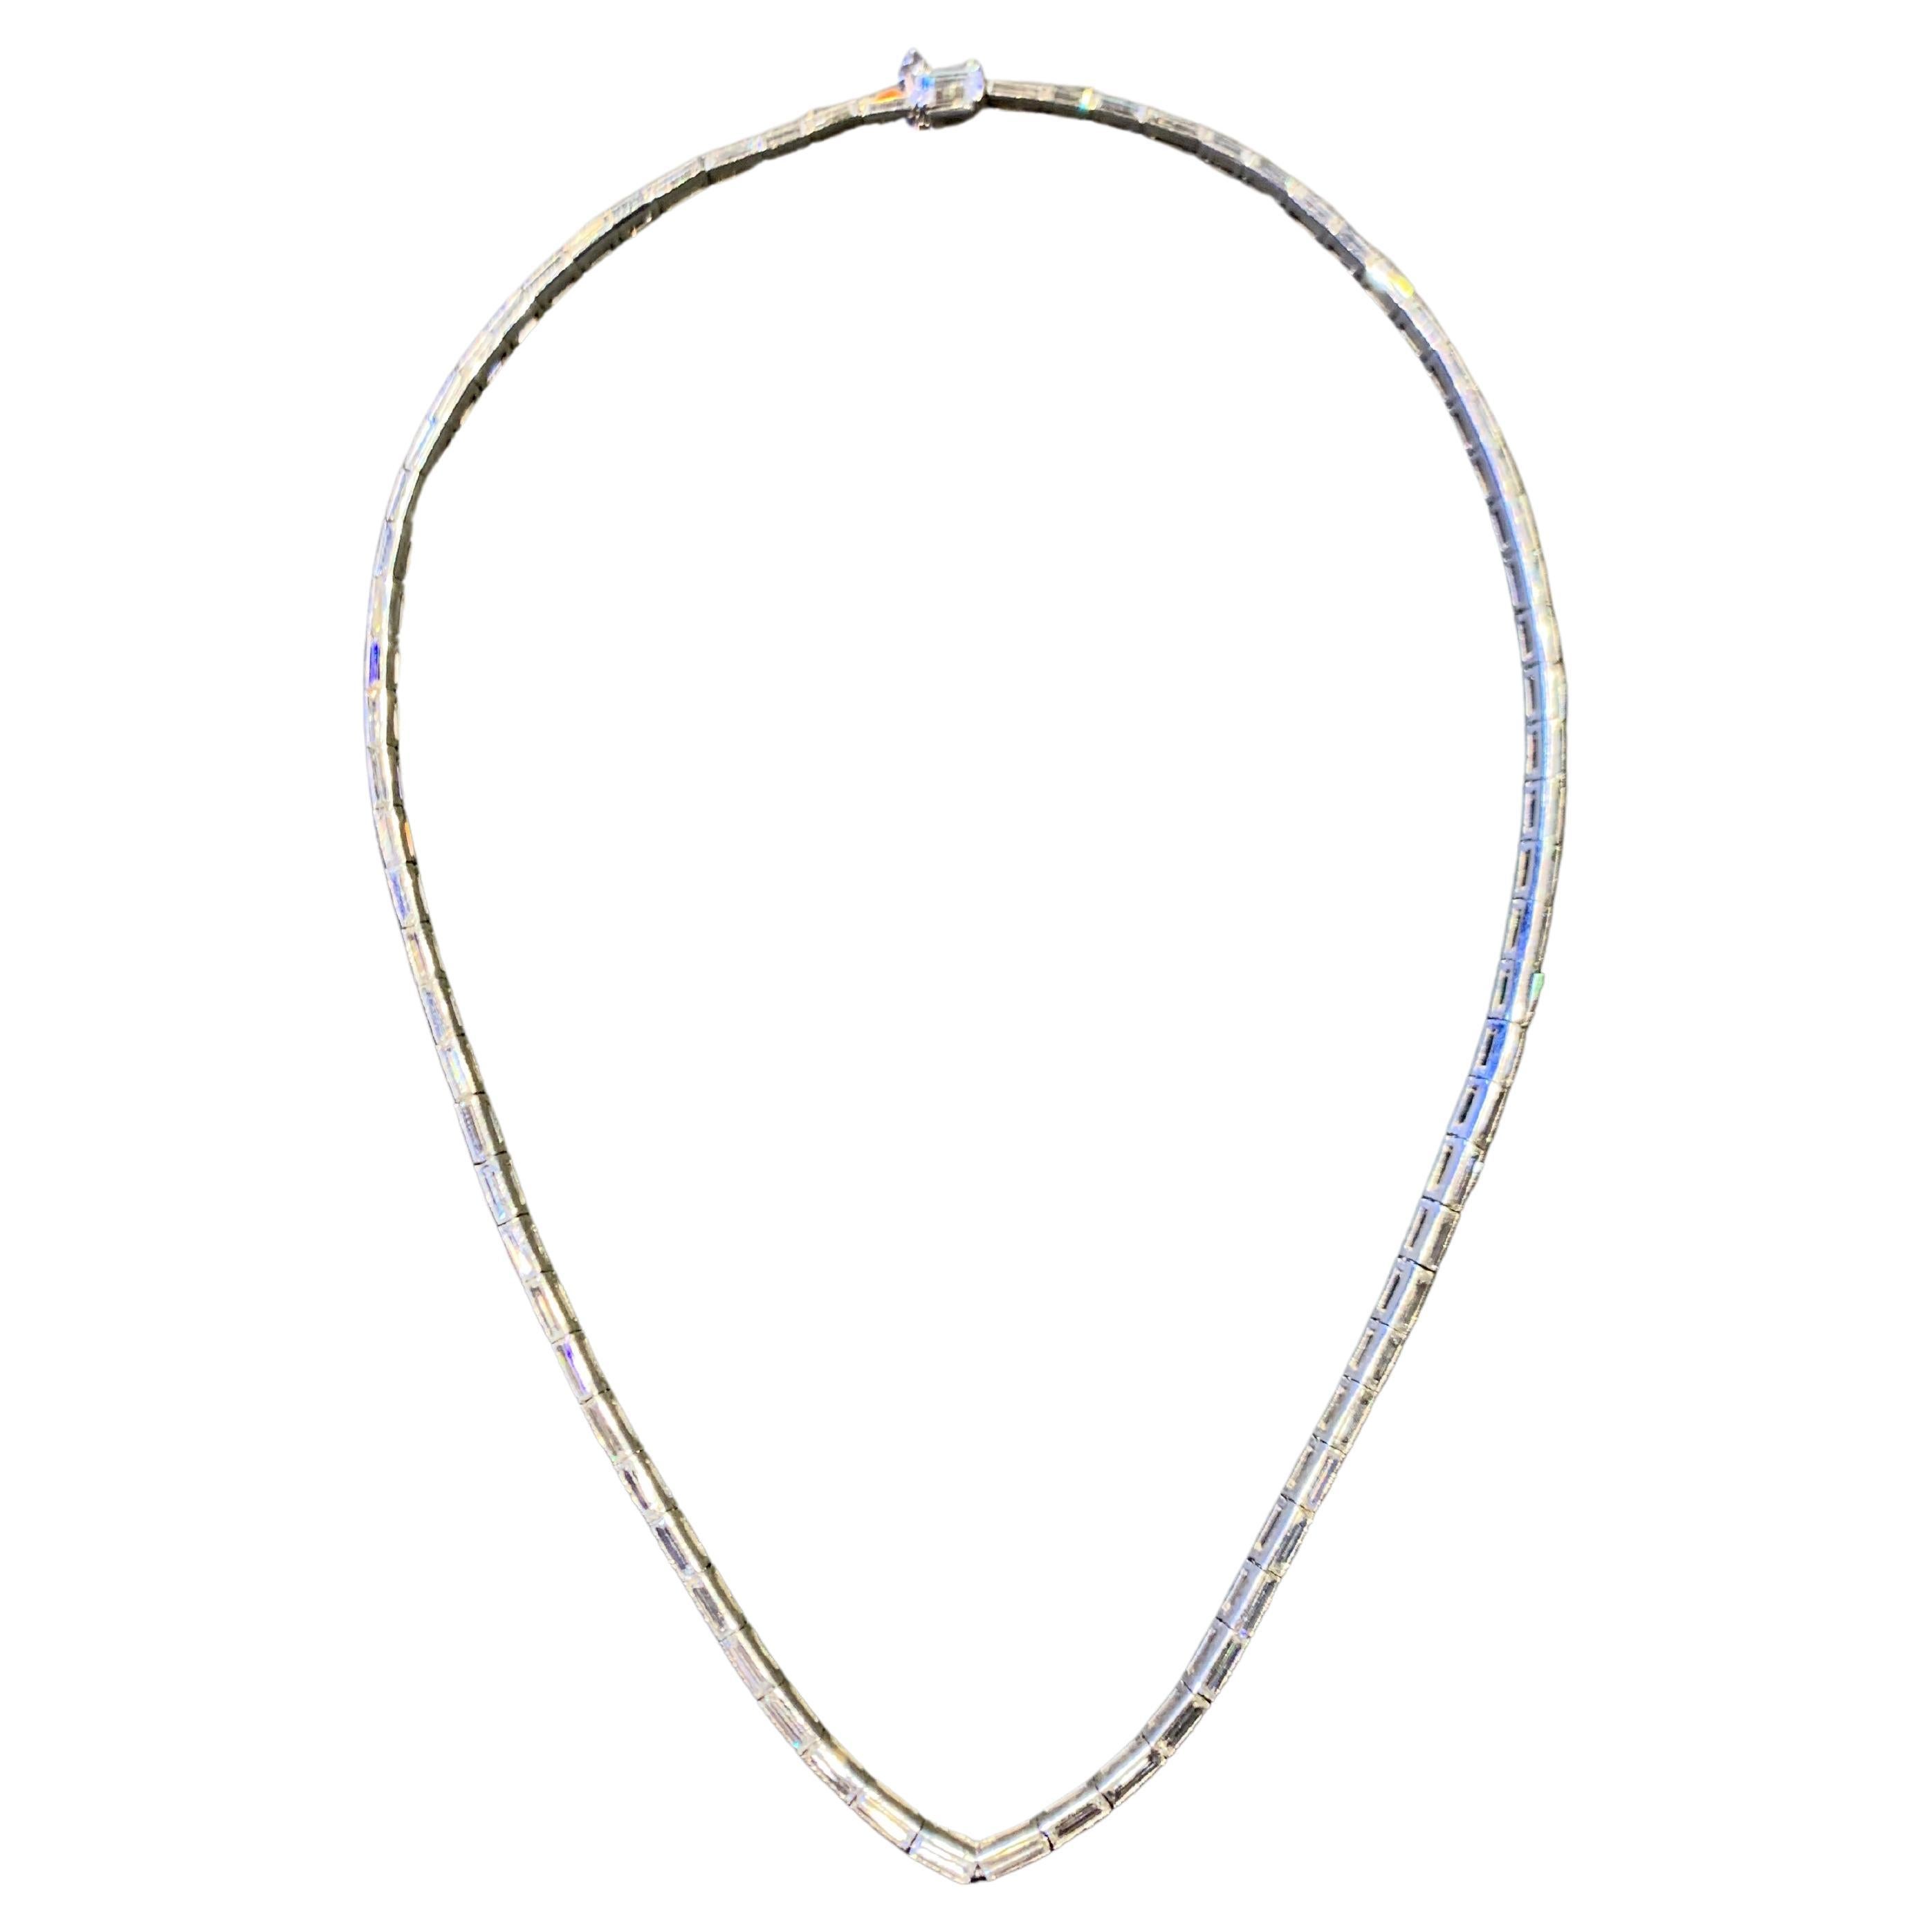 Baguette Cut Diamond Necklace

A platinum necklace set with 72 baguette cut diamonds and 1 emerald cut diamond

Total Approximate Diamond Weight: 7.0 carats

Length: 15.75